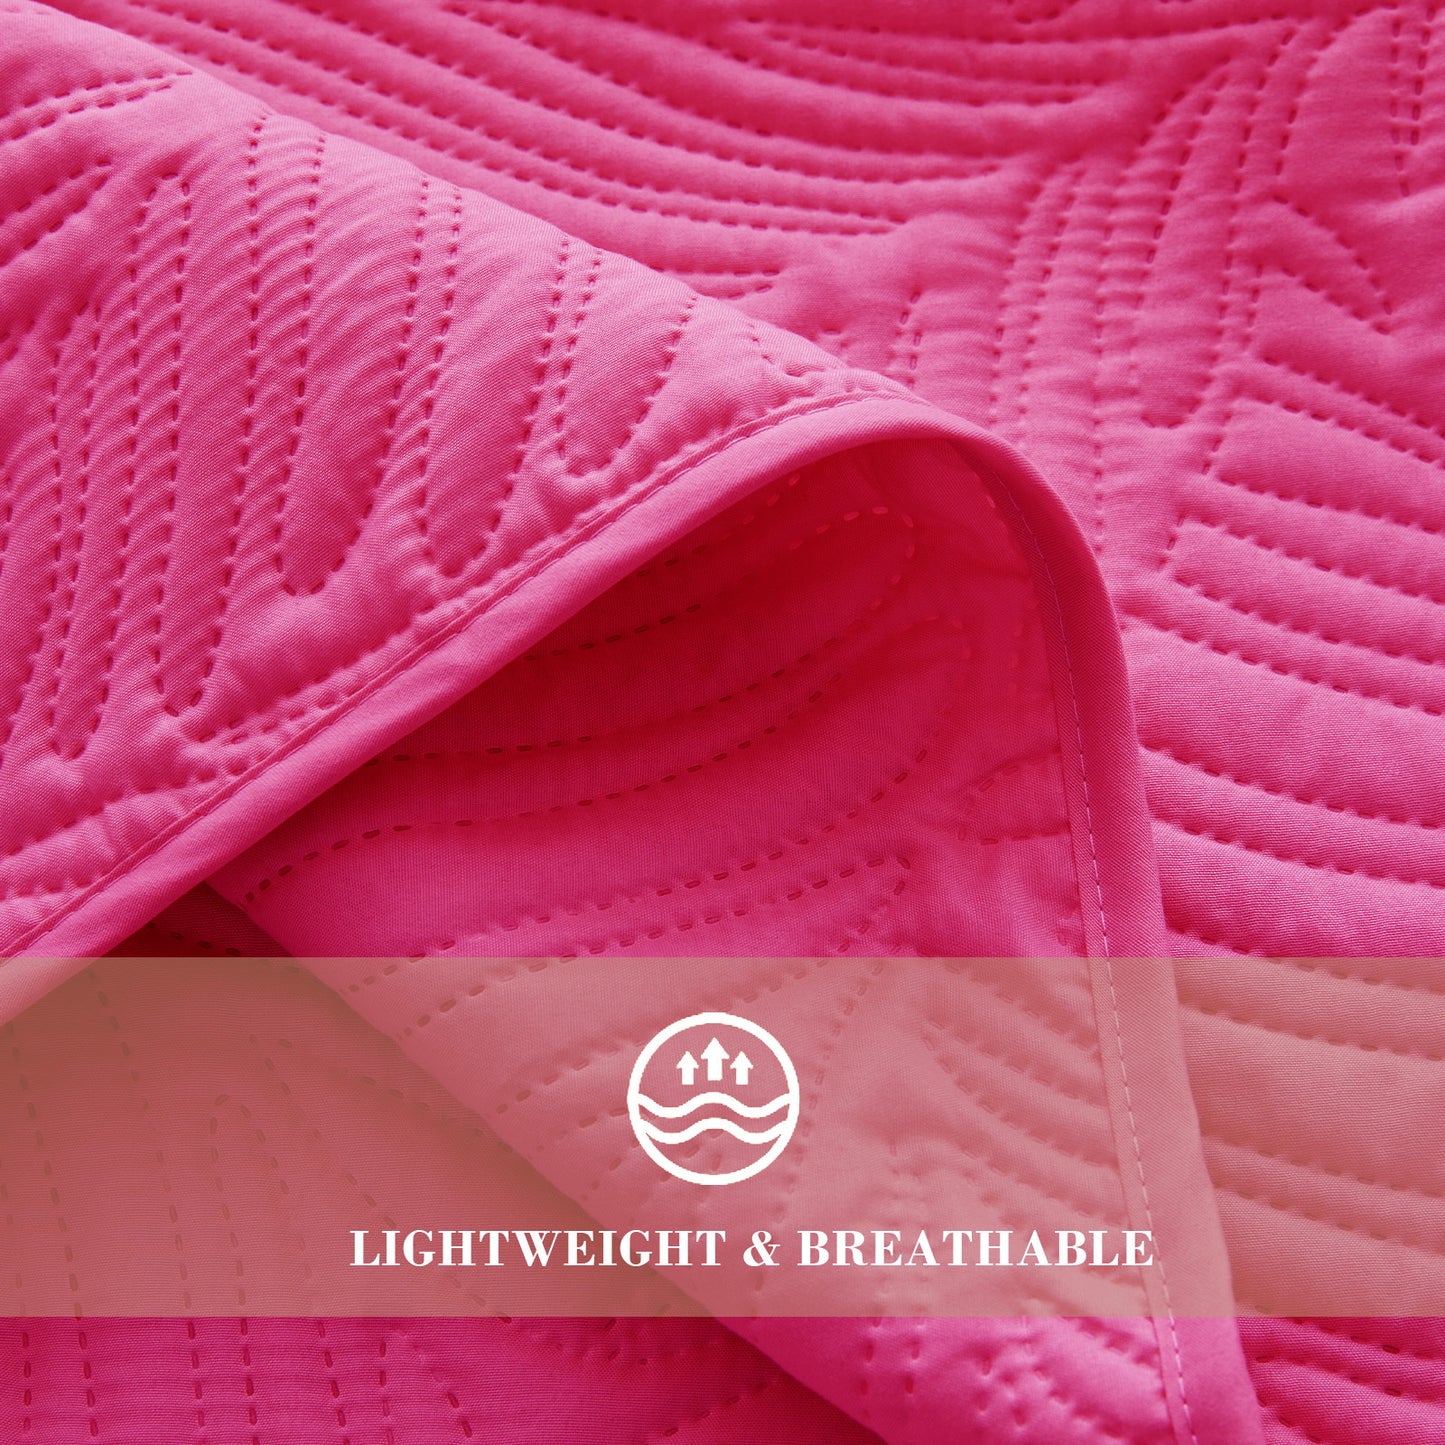 Exclusivo Mezcla King Quilt Set Hot Pink, Lightweight Bedspread Leaf Pattern Bed Cover Soft Coverlet Bedding Set(1 Quilt, 2 Pillow Shams)